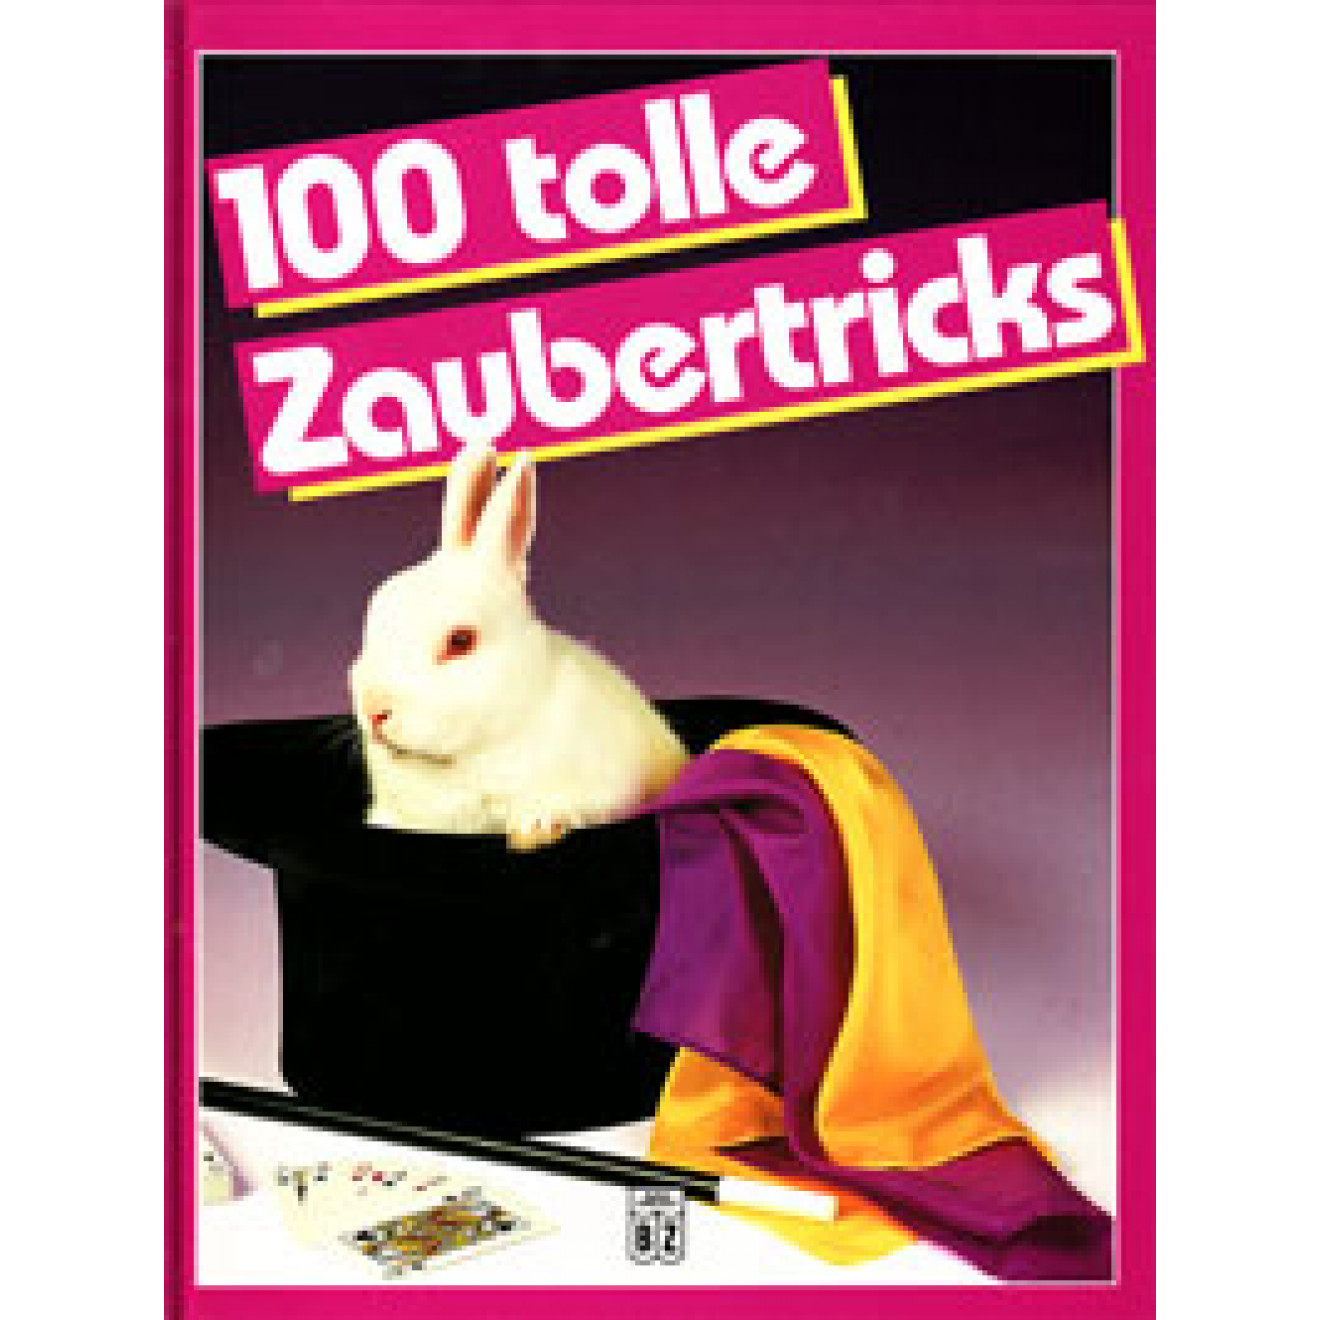 100 tolle Zaubertricks